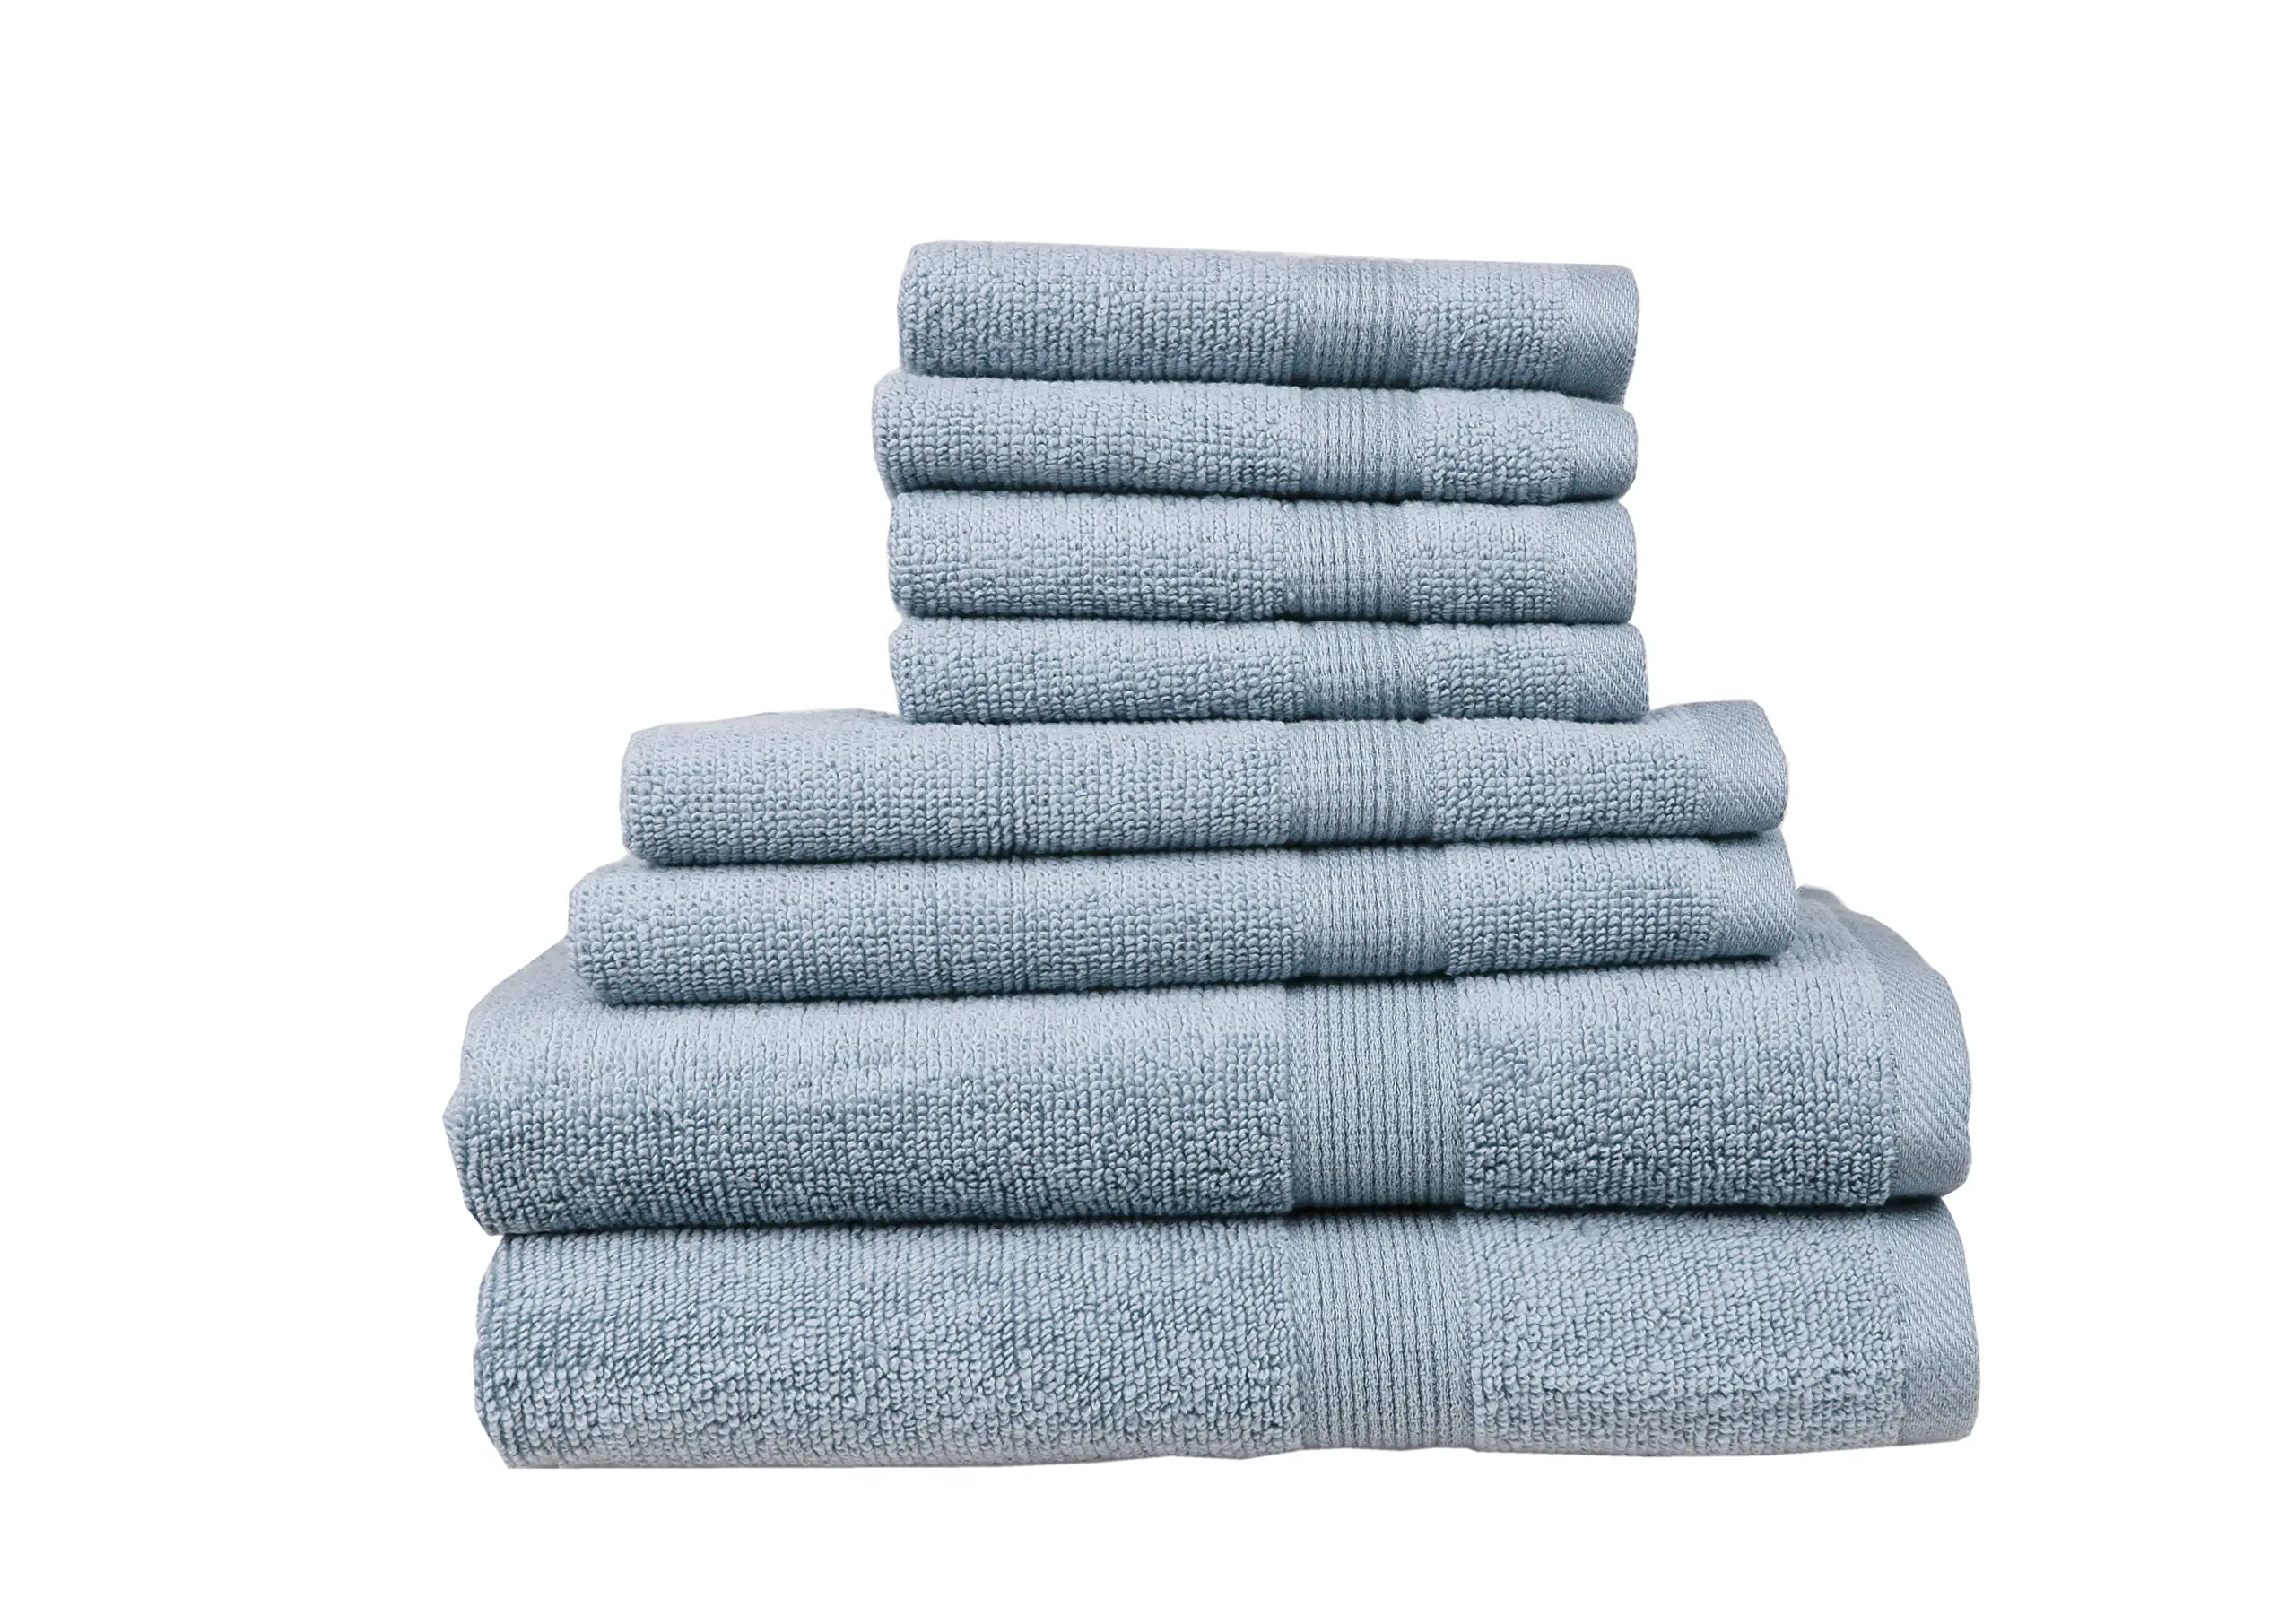 Gym Towels 27x54-600 GSM Luxury Hotel Quality Ultra Soft Super Absorbent Towels for Bathroom Burgundy GLAMBURG 4 Pack Bath Towel Set 100/% Combed Cotton Large Bath Towels